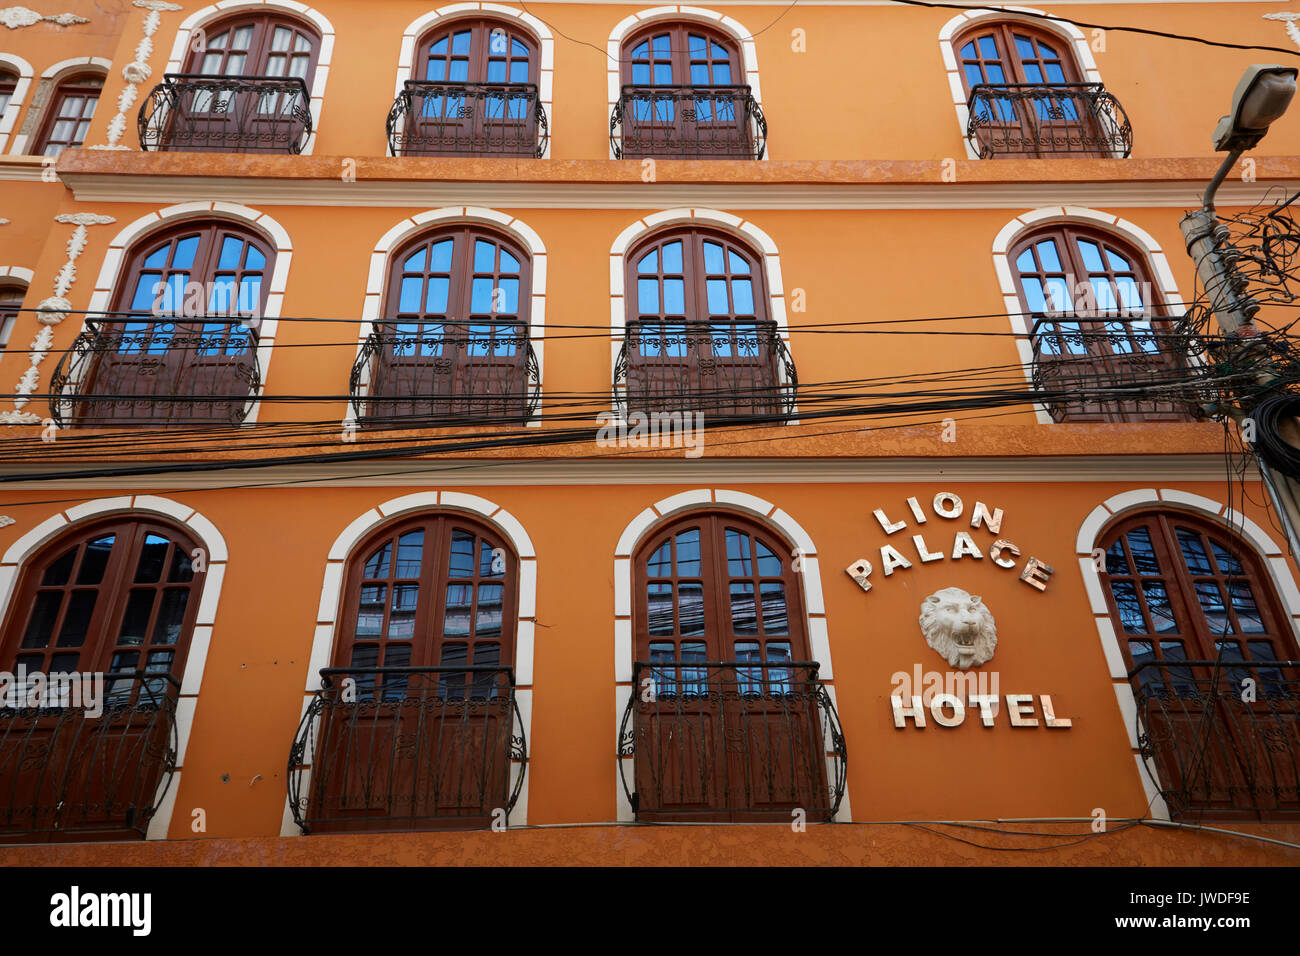 Facade of Lion Palace Hotel, La Paz, Bolivia, South America Stock Photo